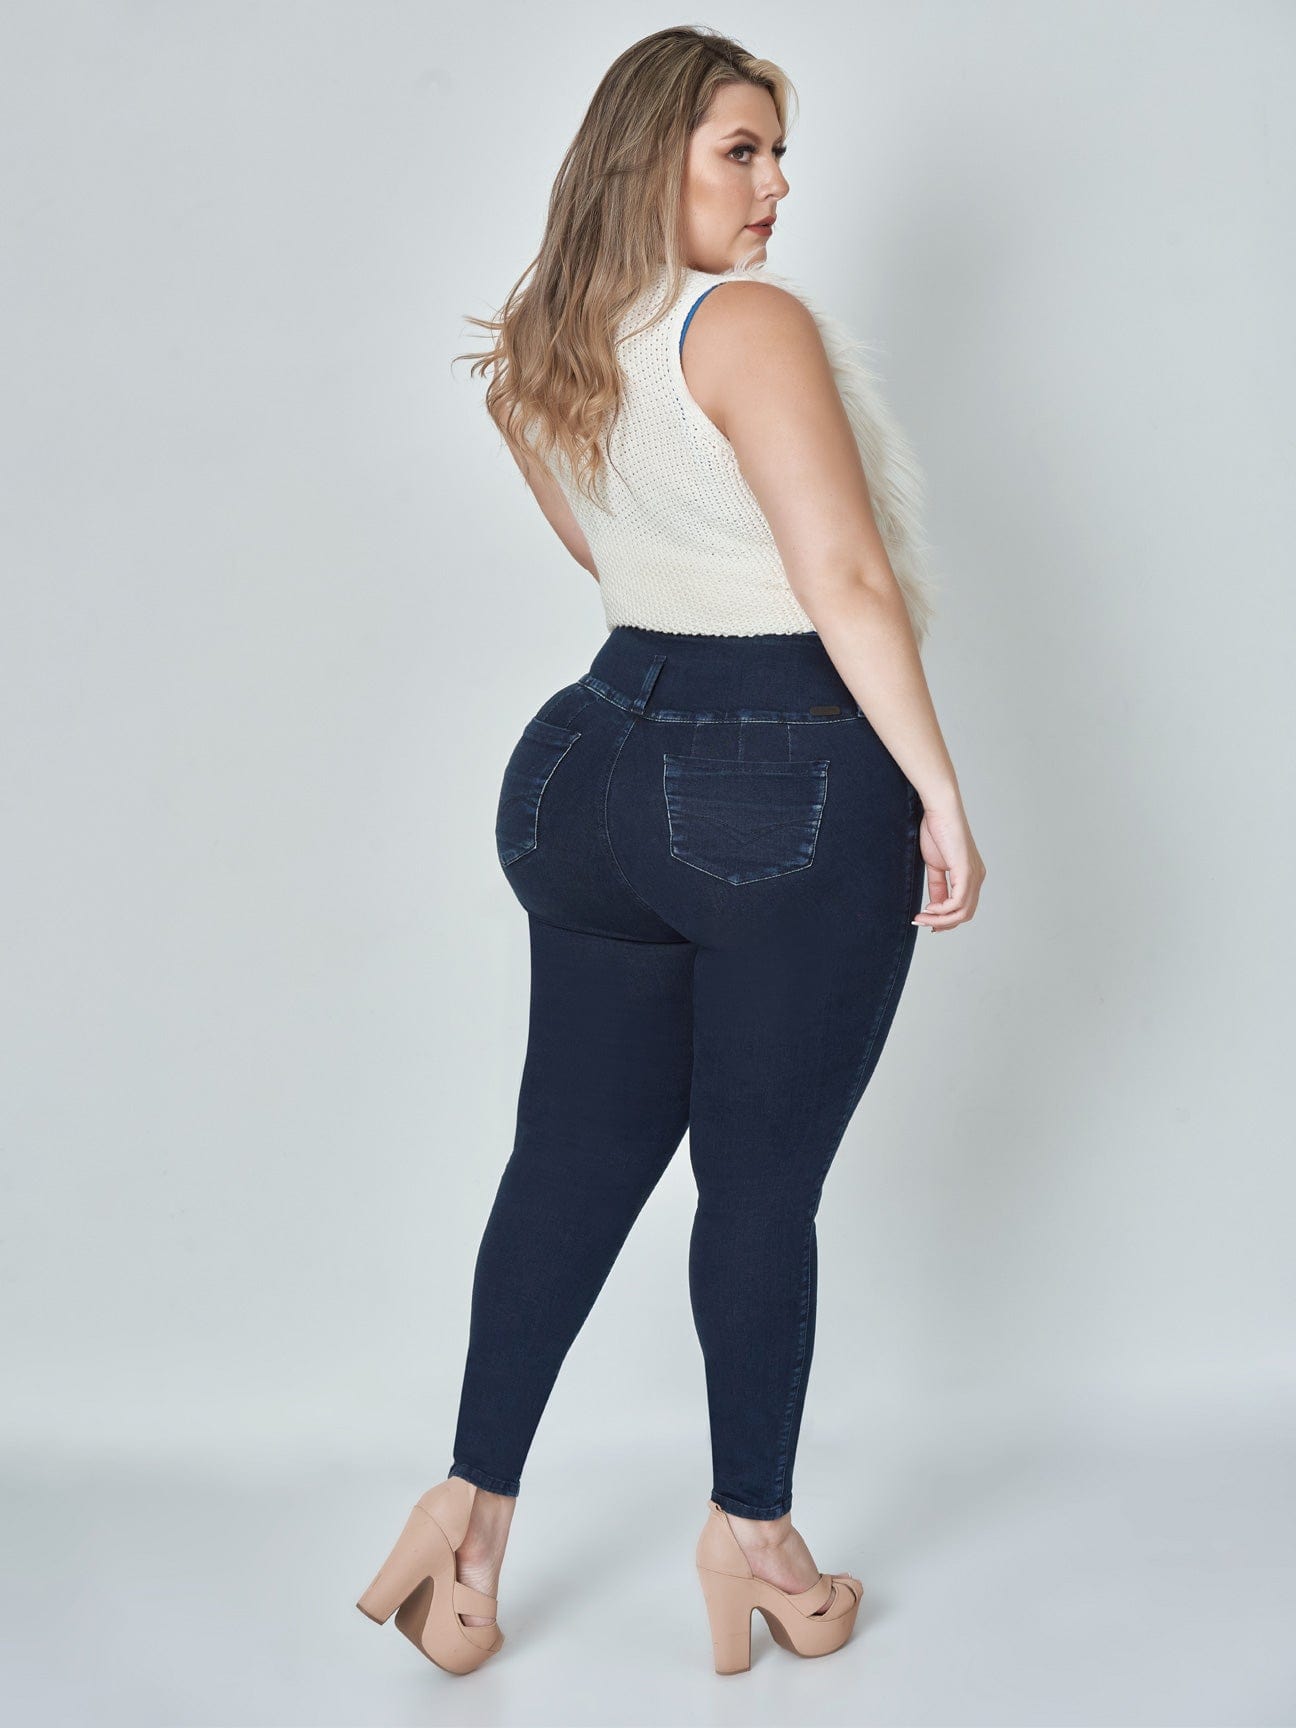 Carmen Tummy Control Jeans full body back view plus sized model.